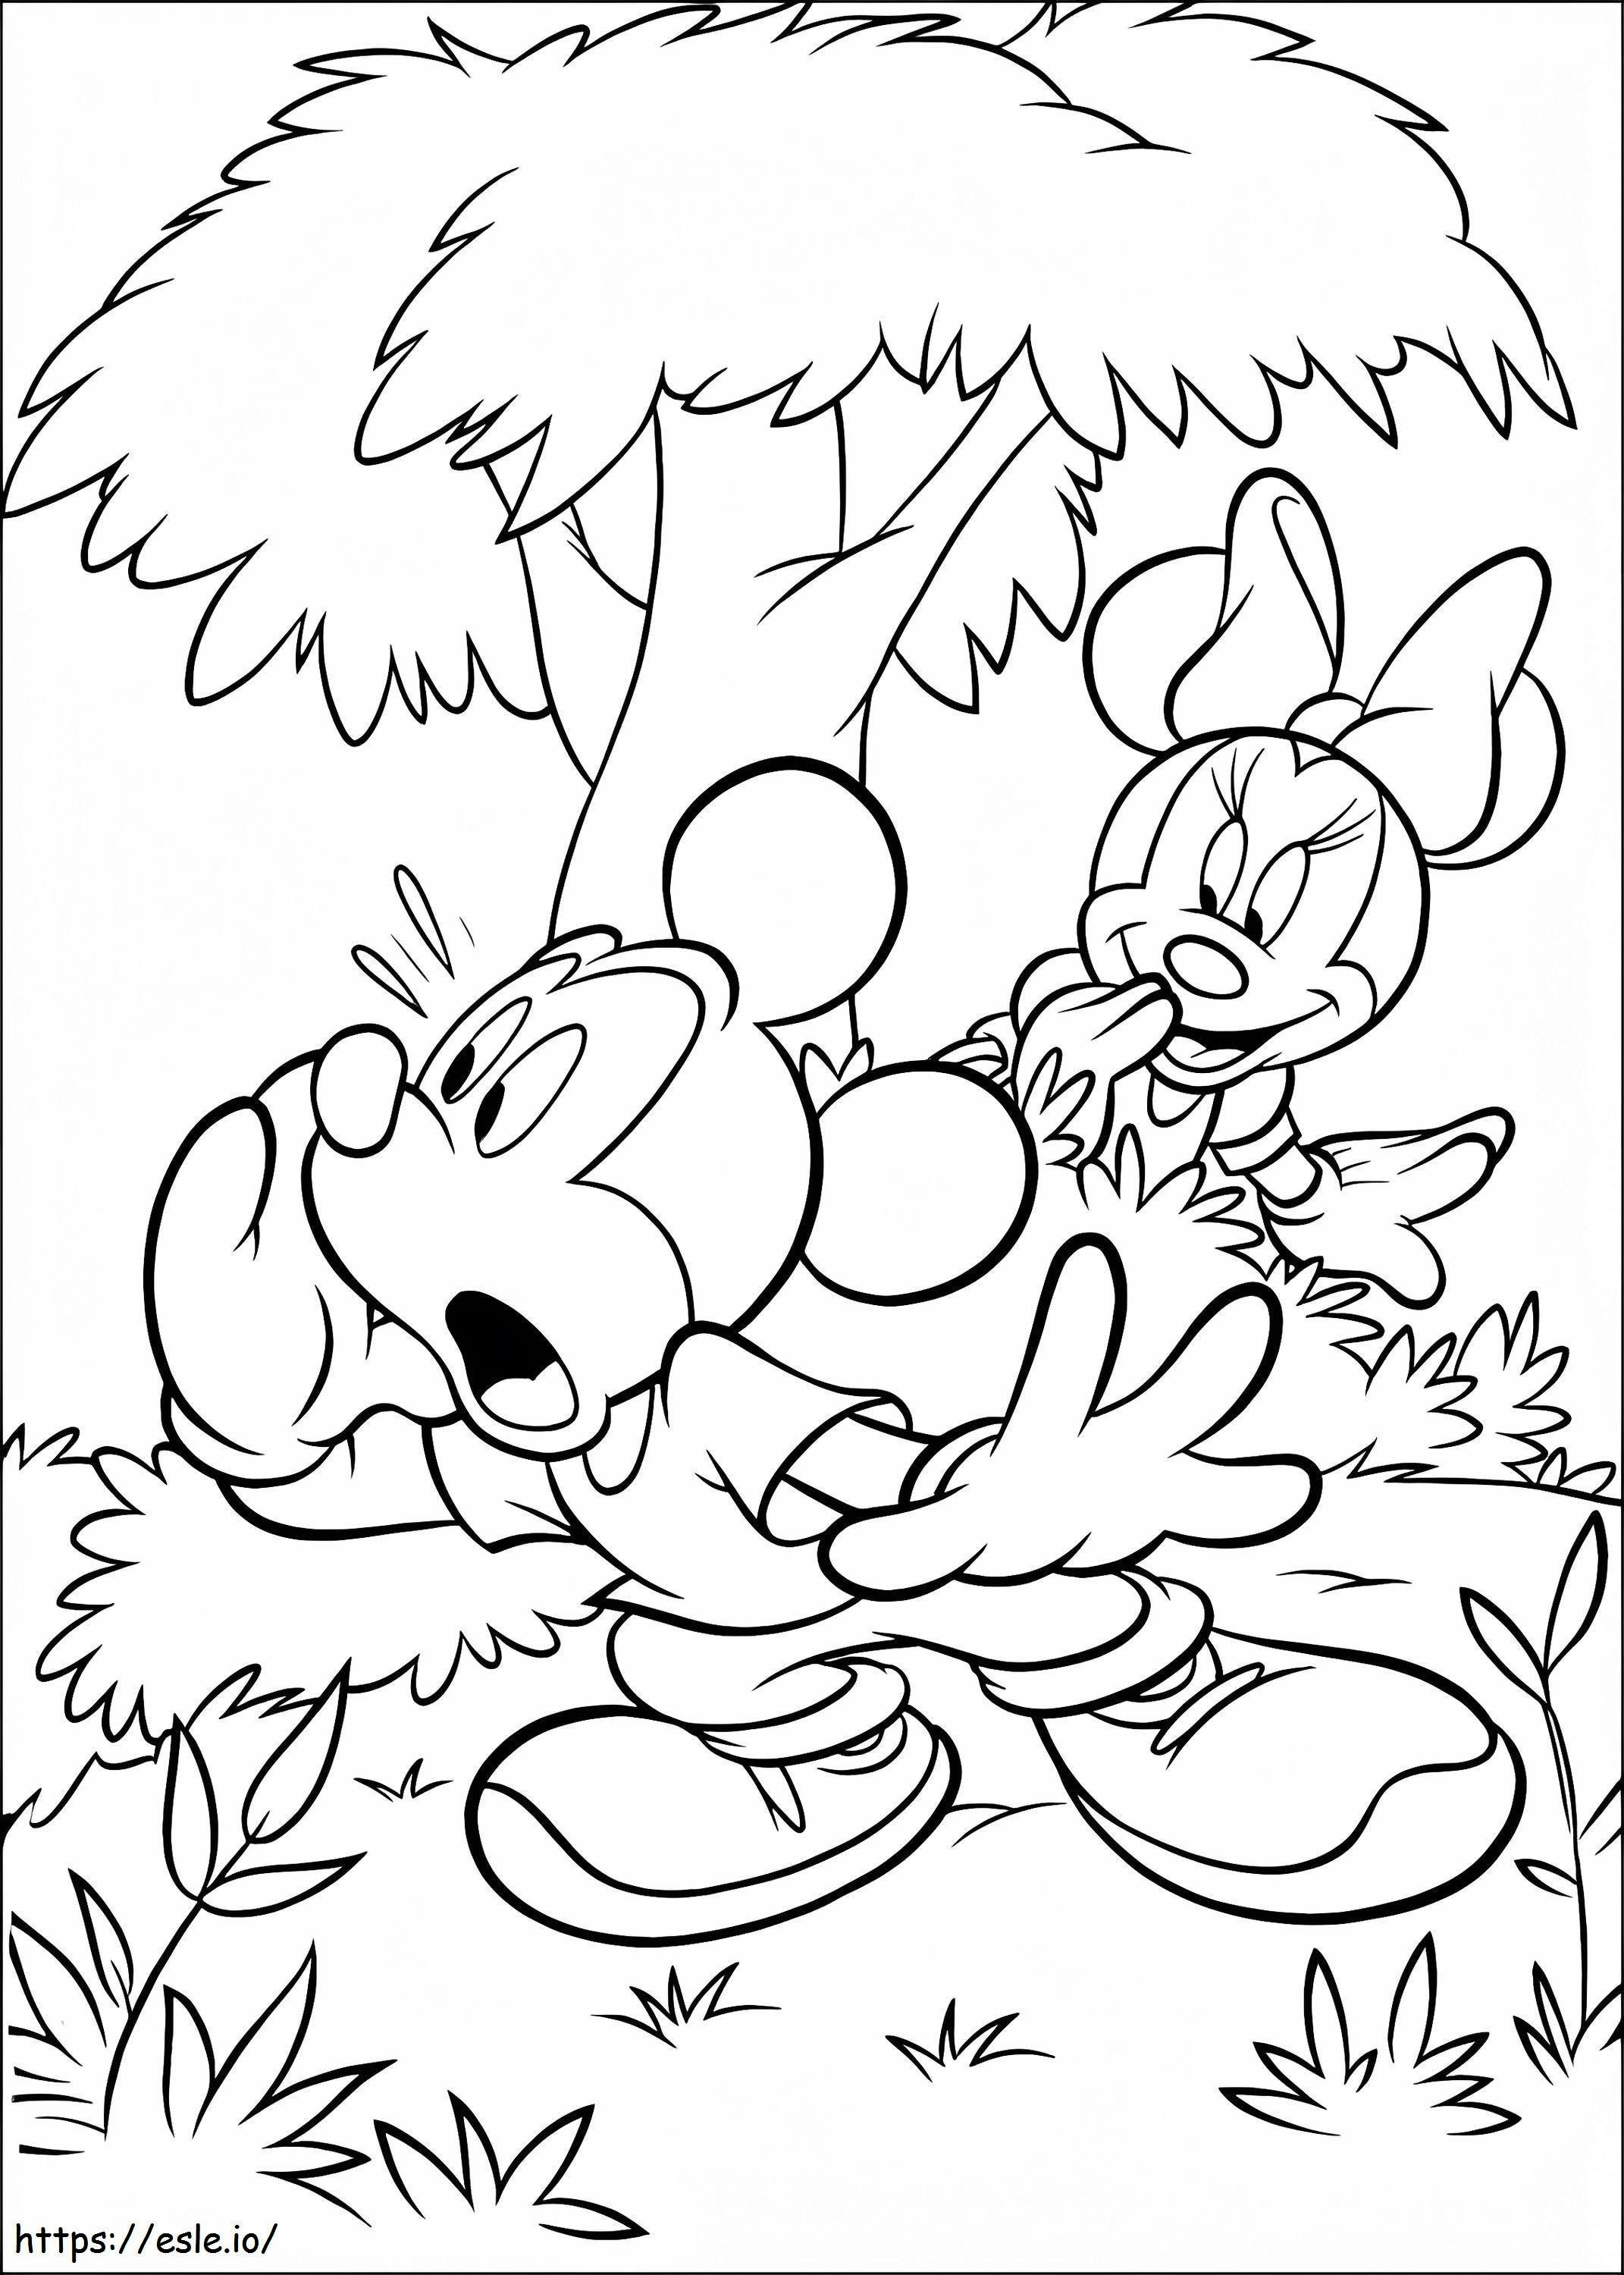 Mickey buscando a Minnie para colorear